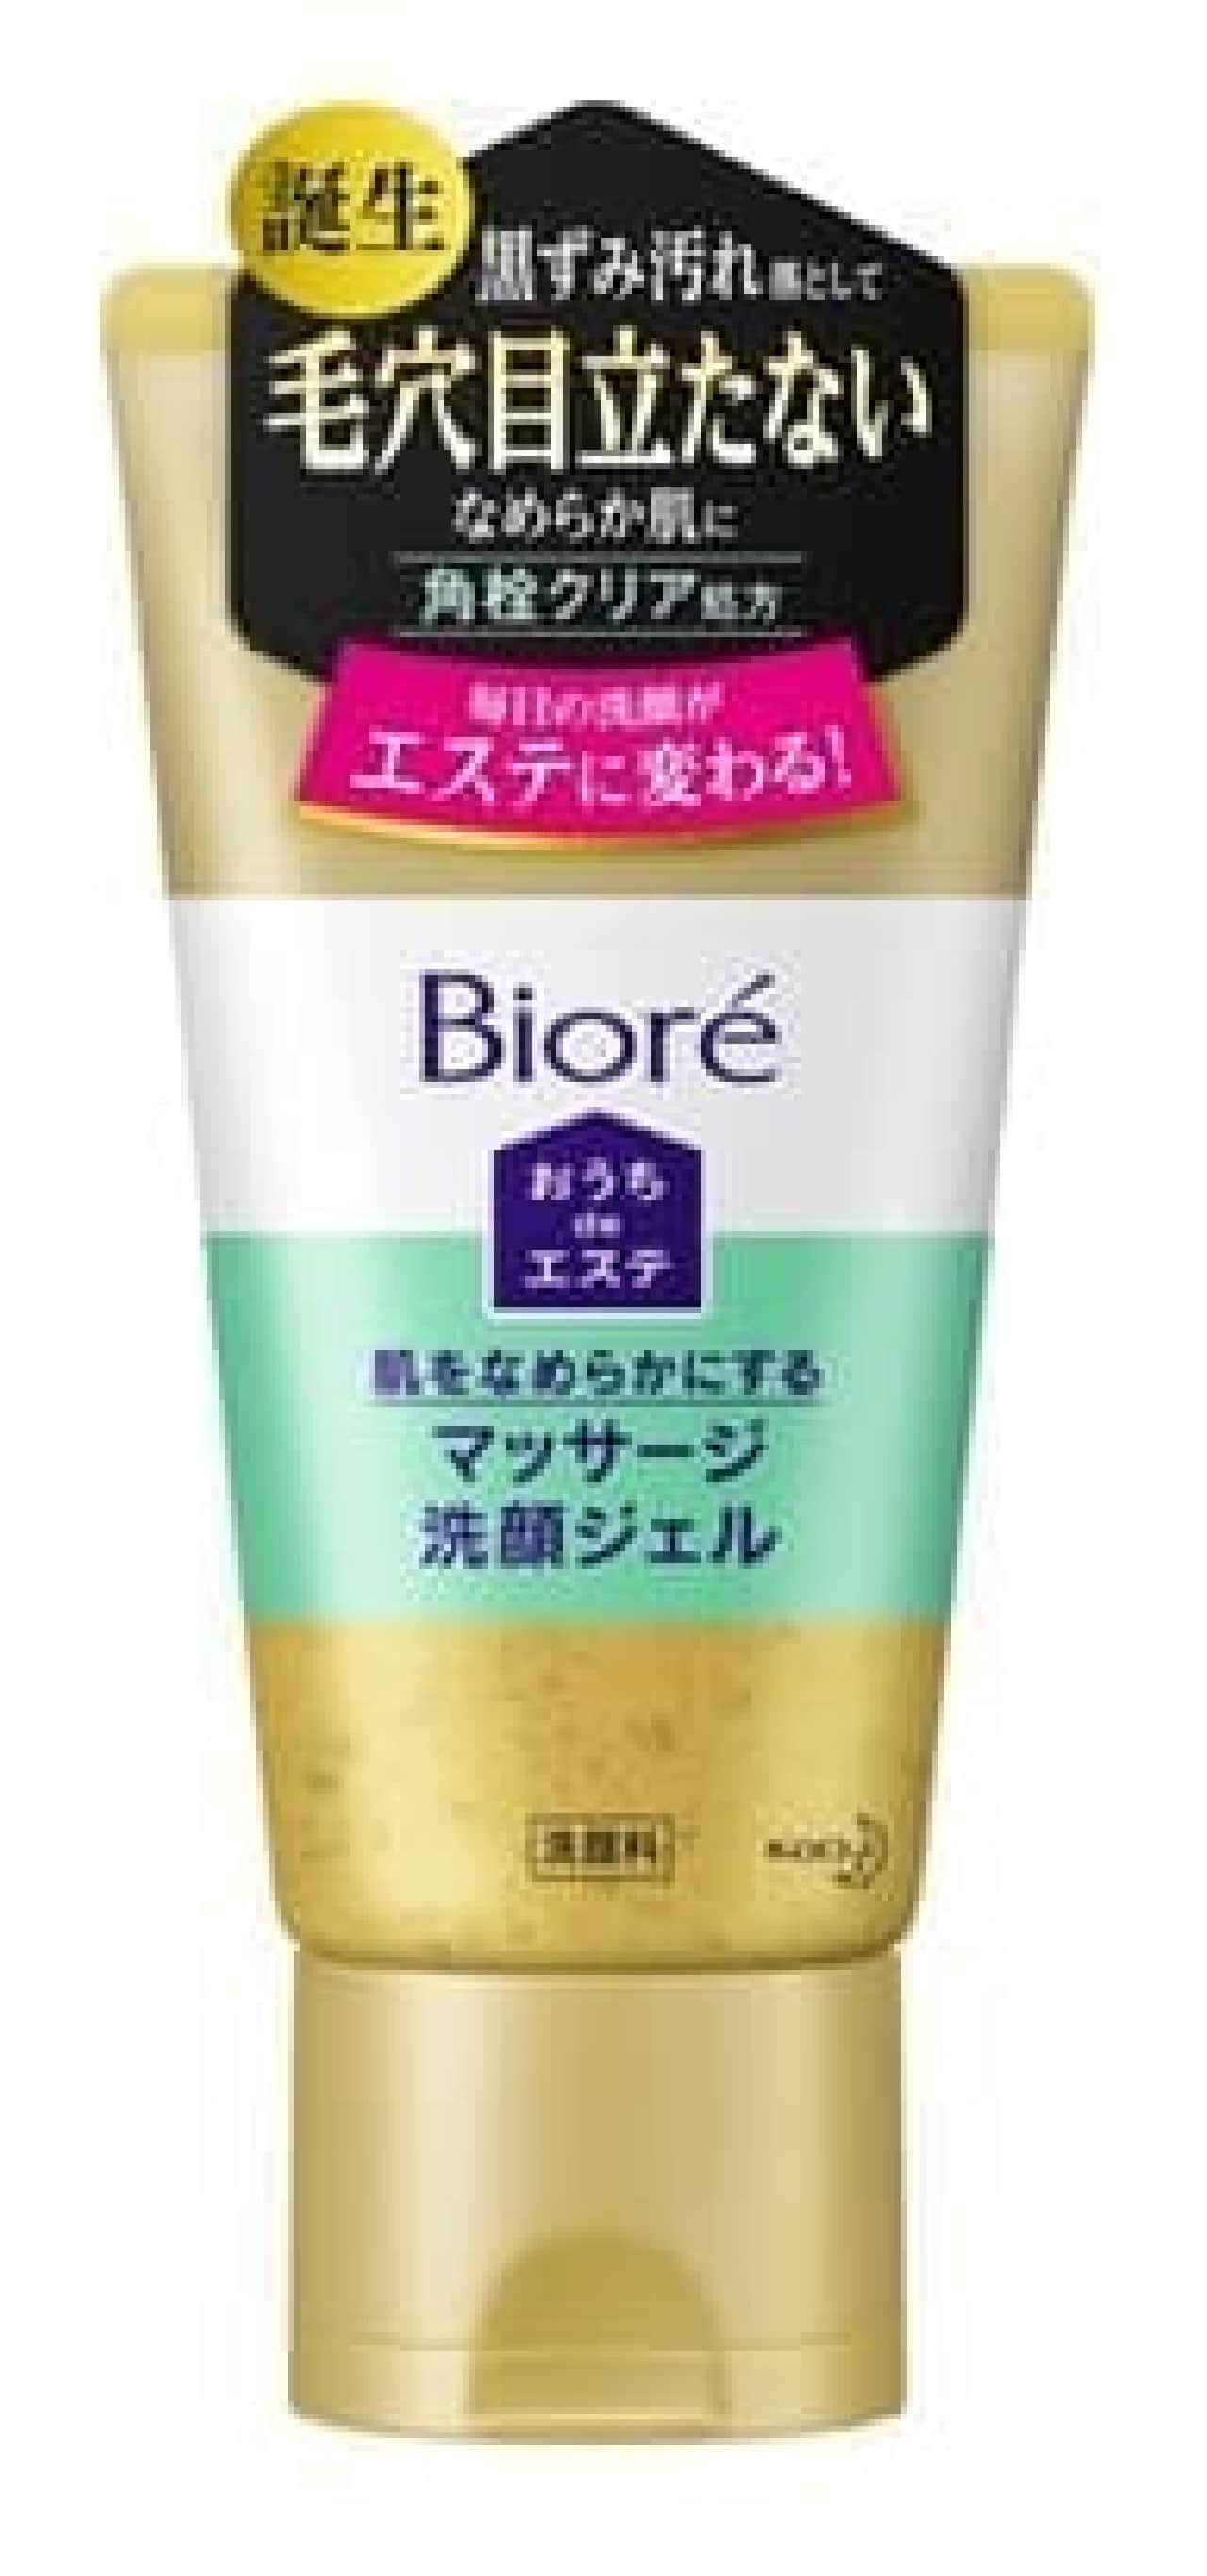 Biore House de Esthe, a massage facial gel that smoothes the skin